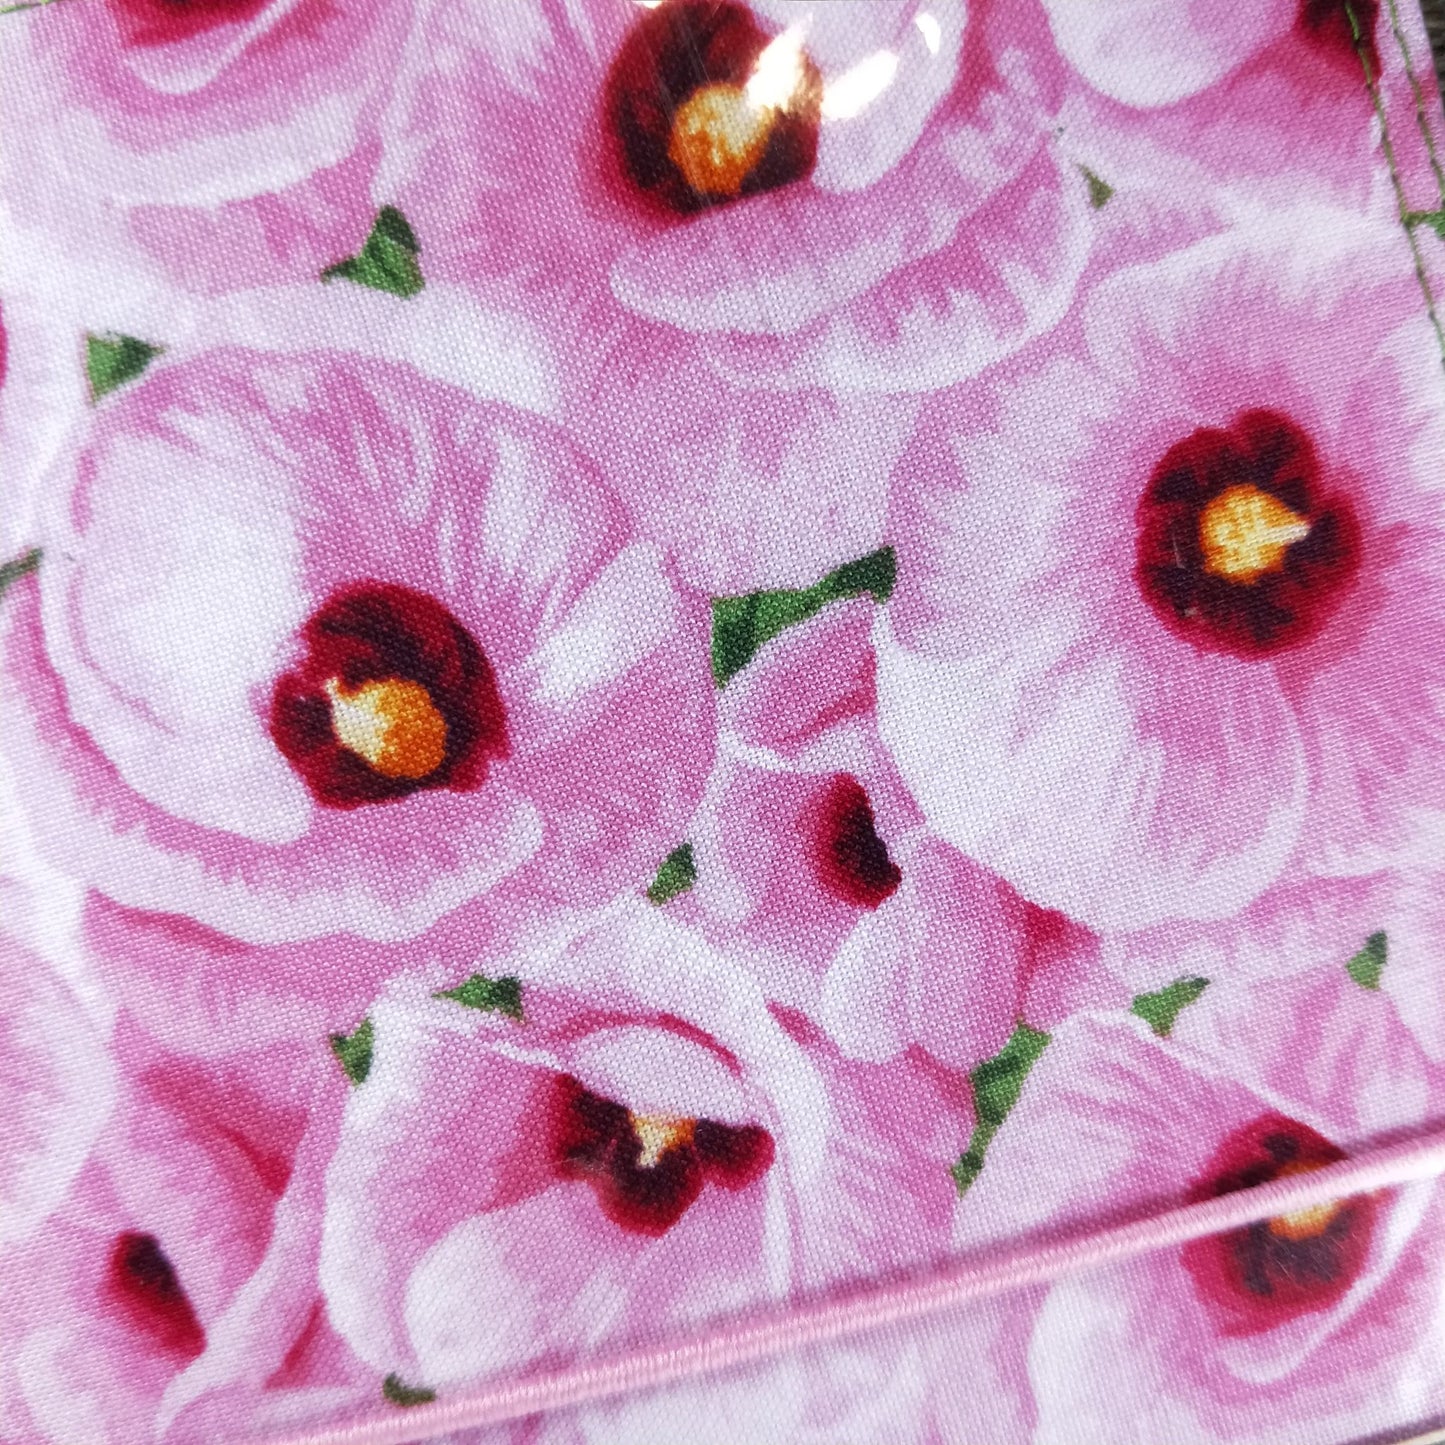 Wilddori Traveler's Notebook Cover Pink Flowers